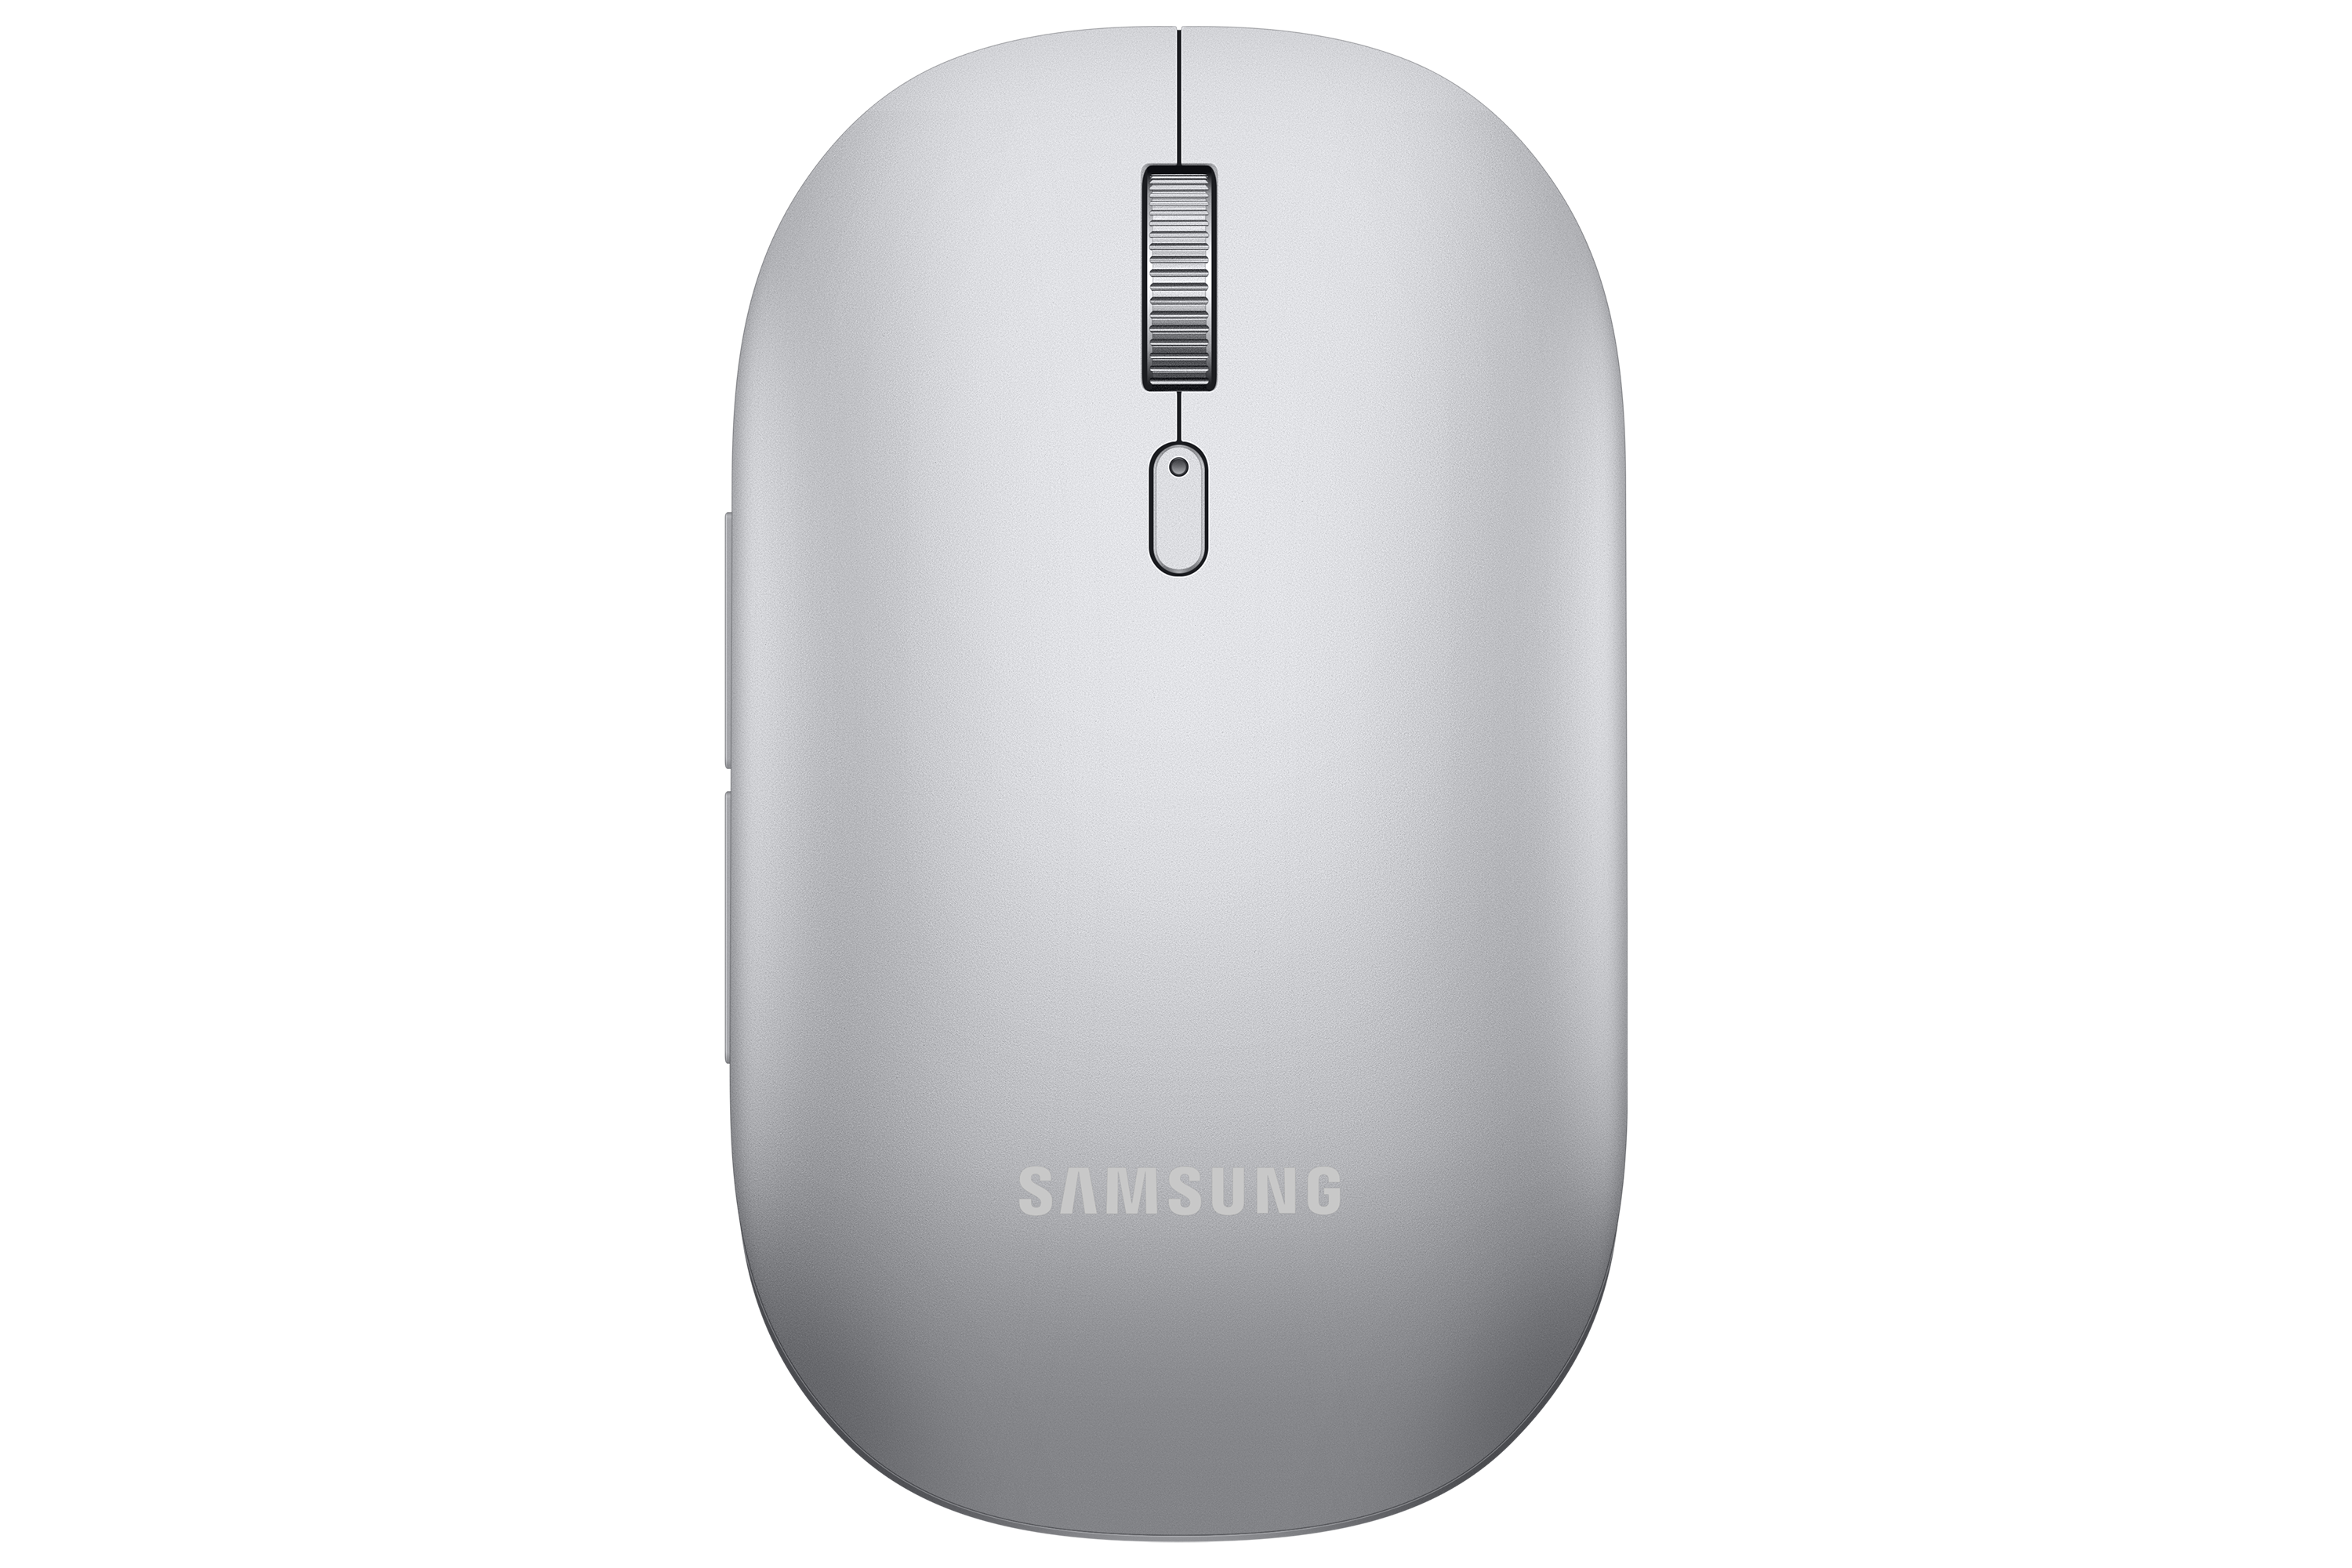 Raad eens dood scherp Bluetooth Mouse Slim, Silver Computing Accessories - EJ-M3400DSEGUS |  Samsung US